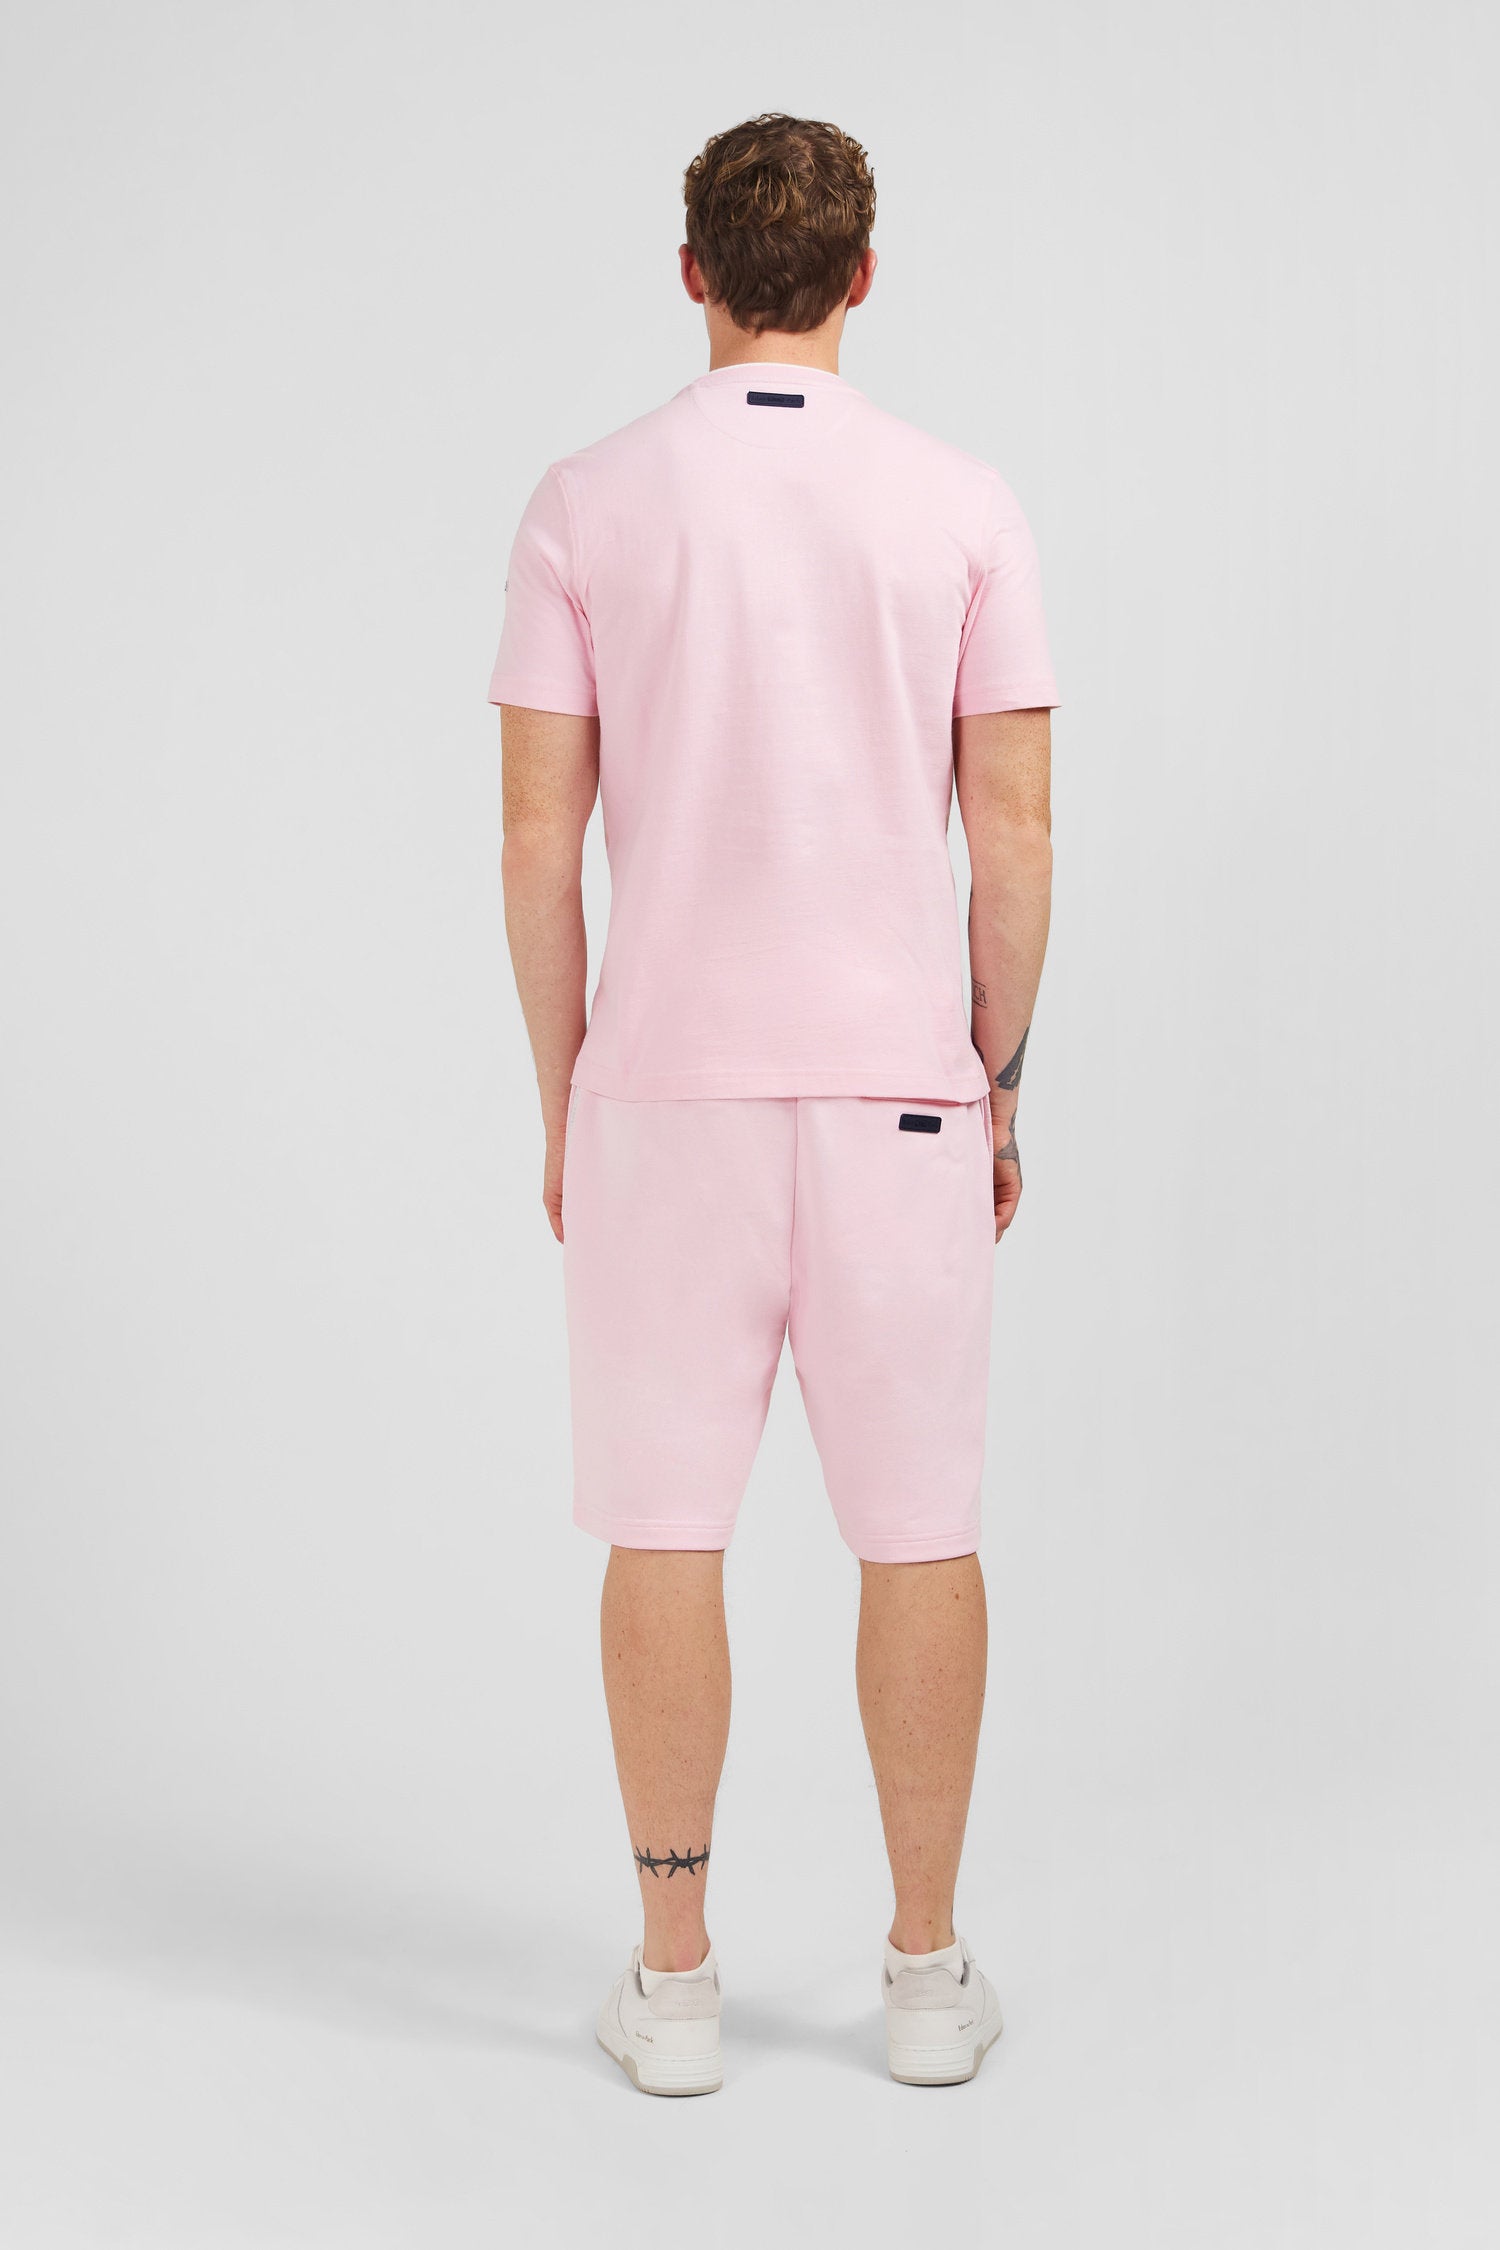 Plain Pink Short-Sleeved T-Shirt_E24MAITC0018_ROC16_04